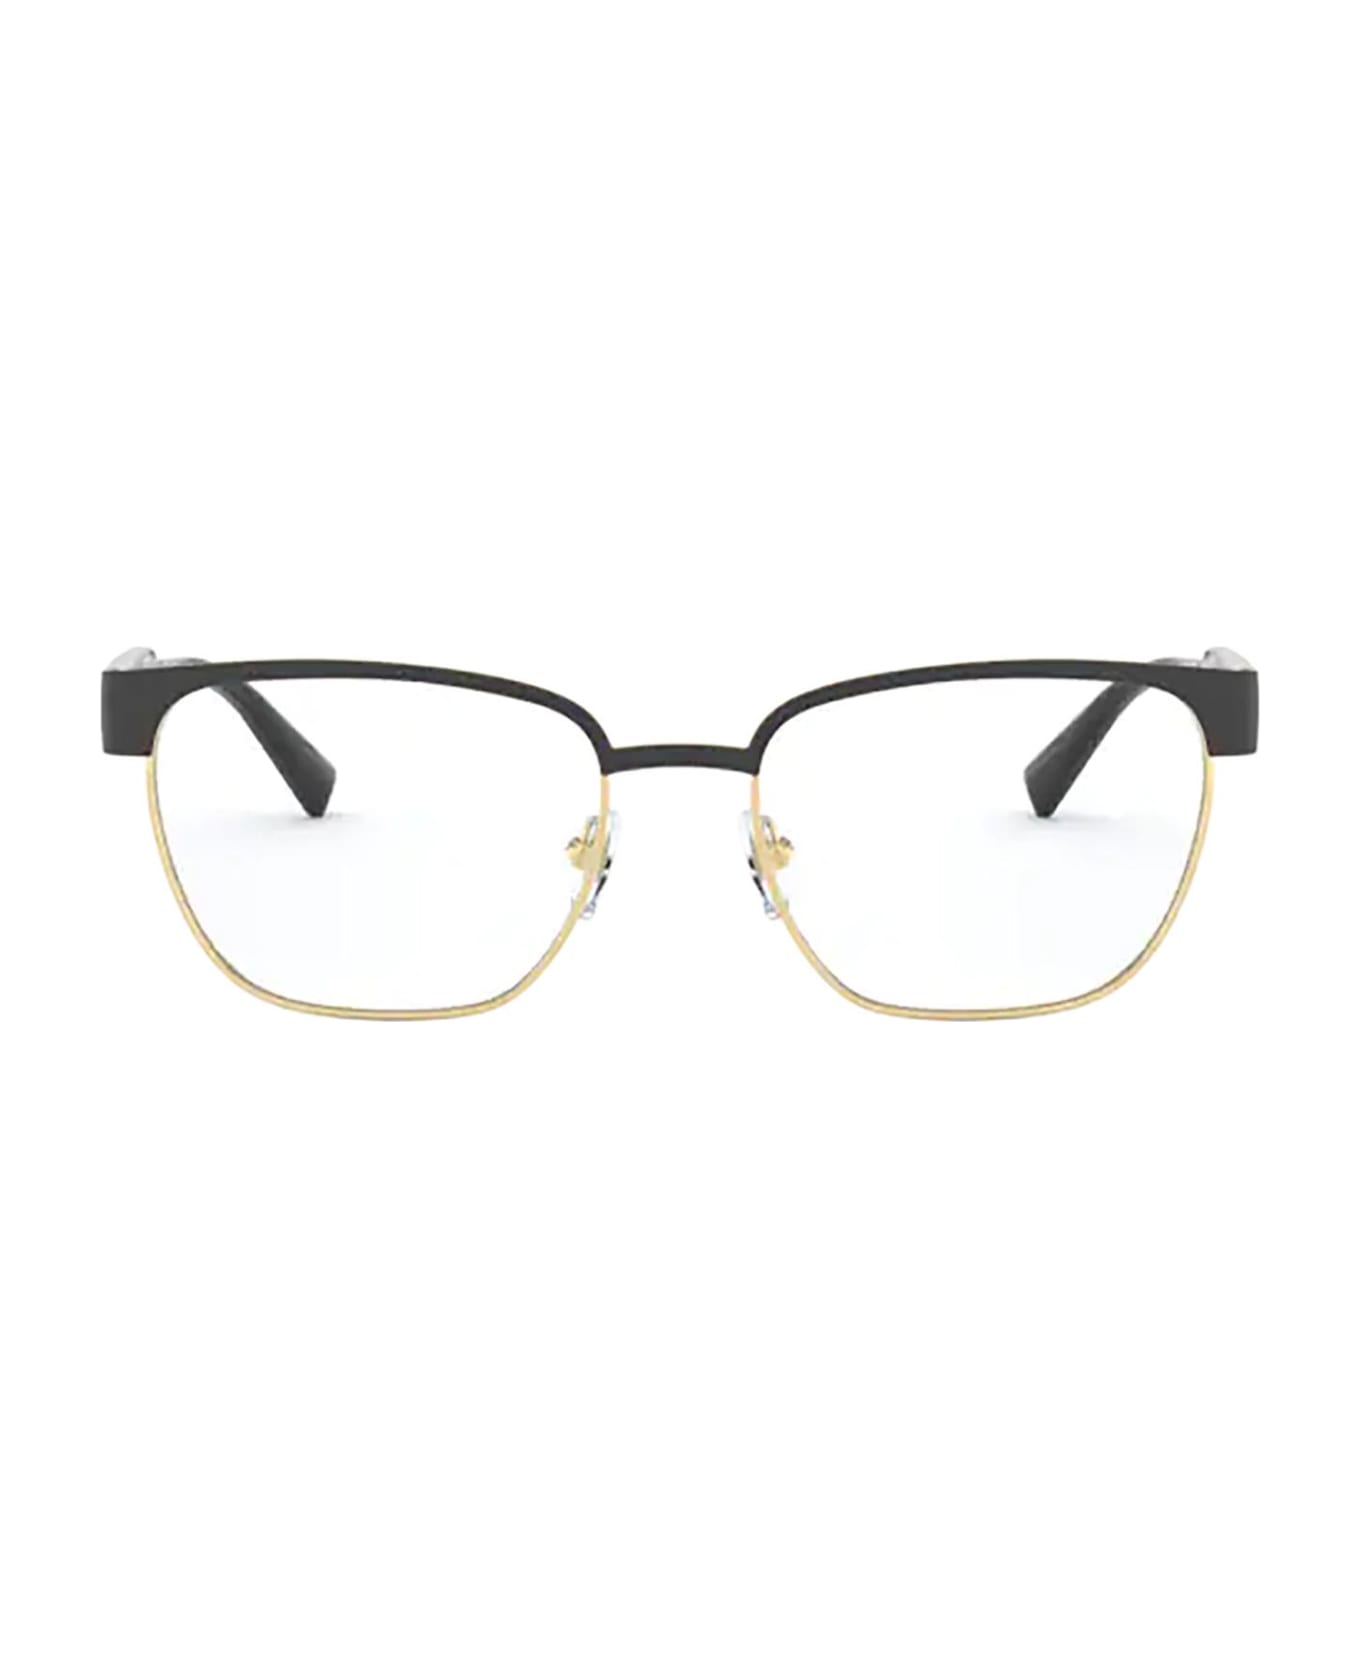 Versace Eyewear Ve1264 Matte Black / Gold Glasses - Matte Black / Gold